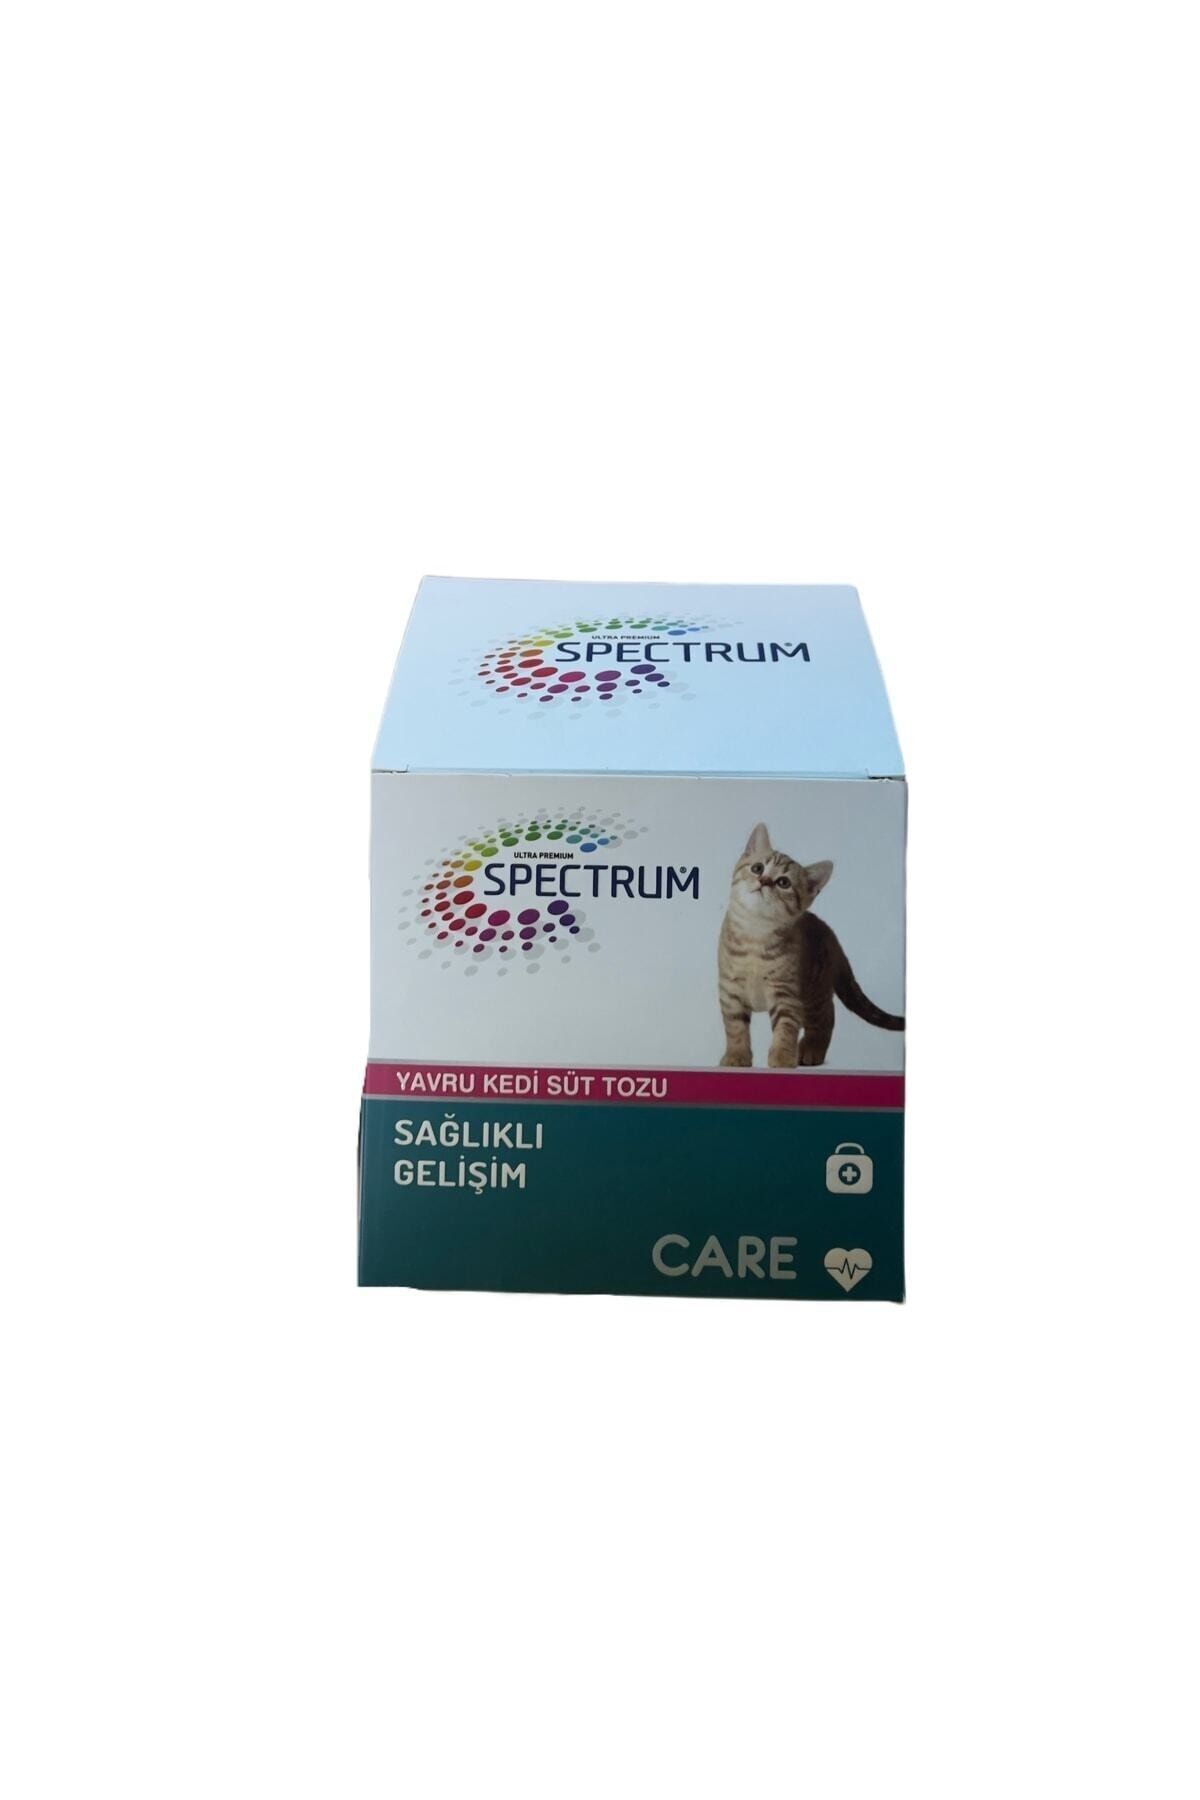 Spectrum Care Yavru Kedi Süt Tozu 150 Gr